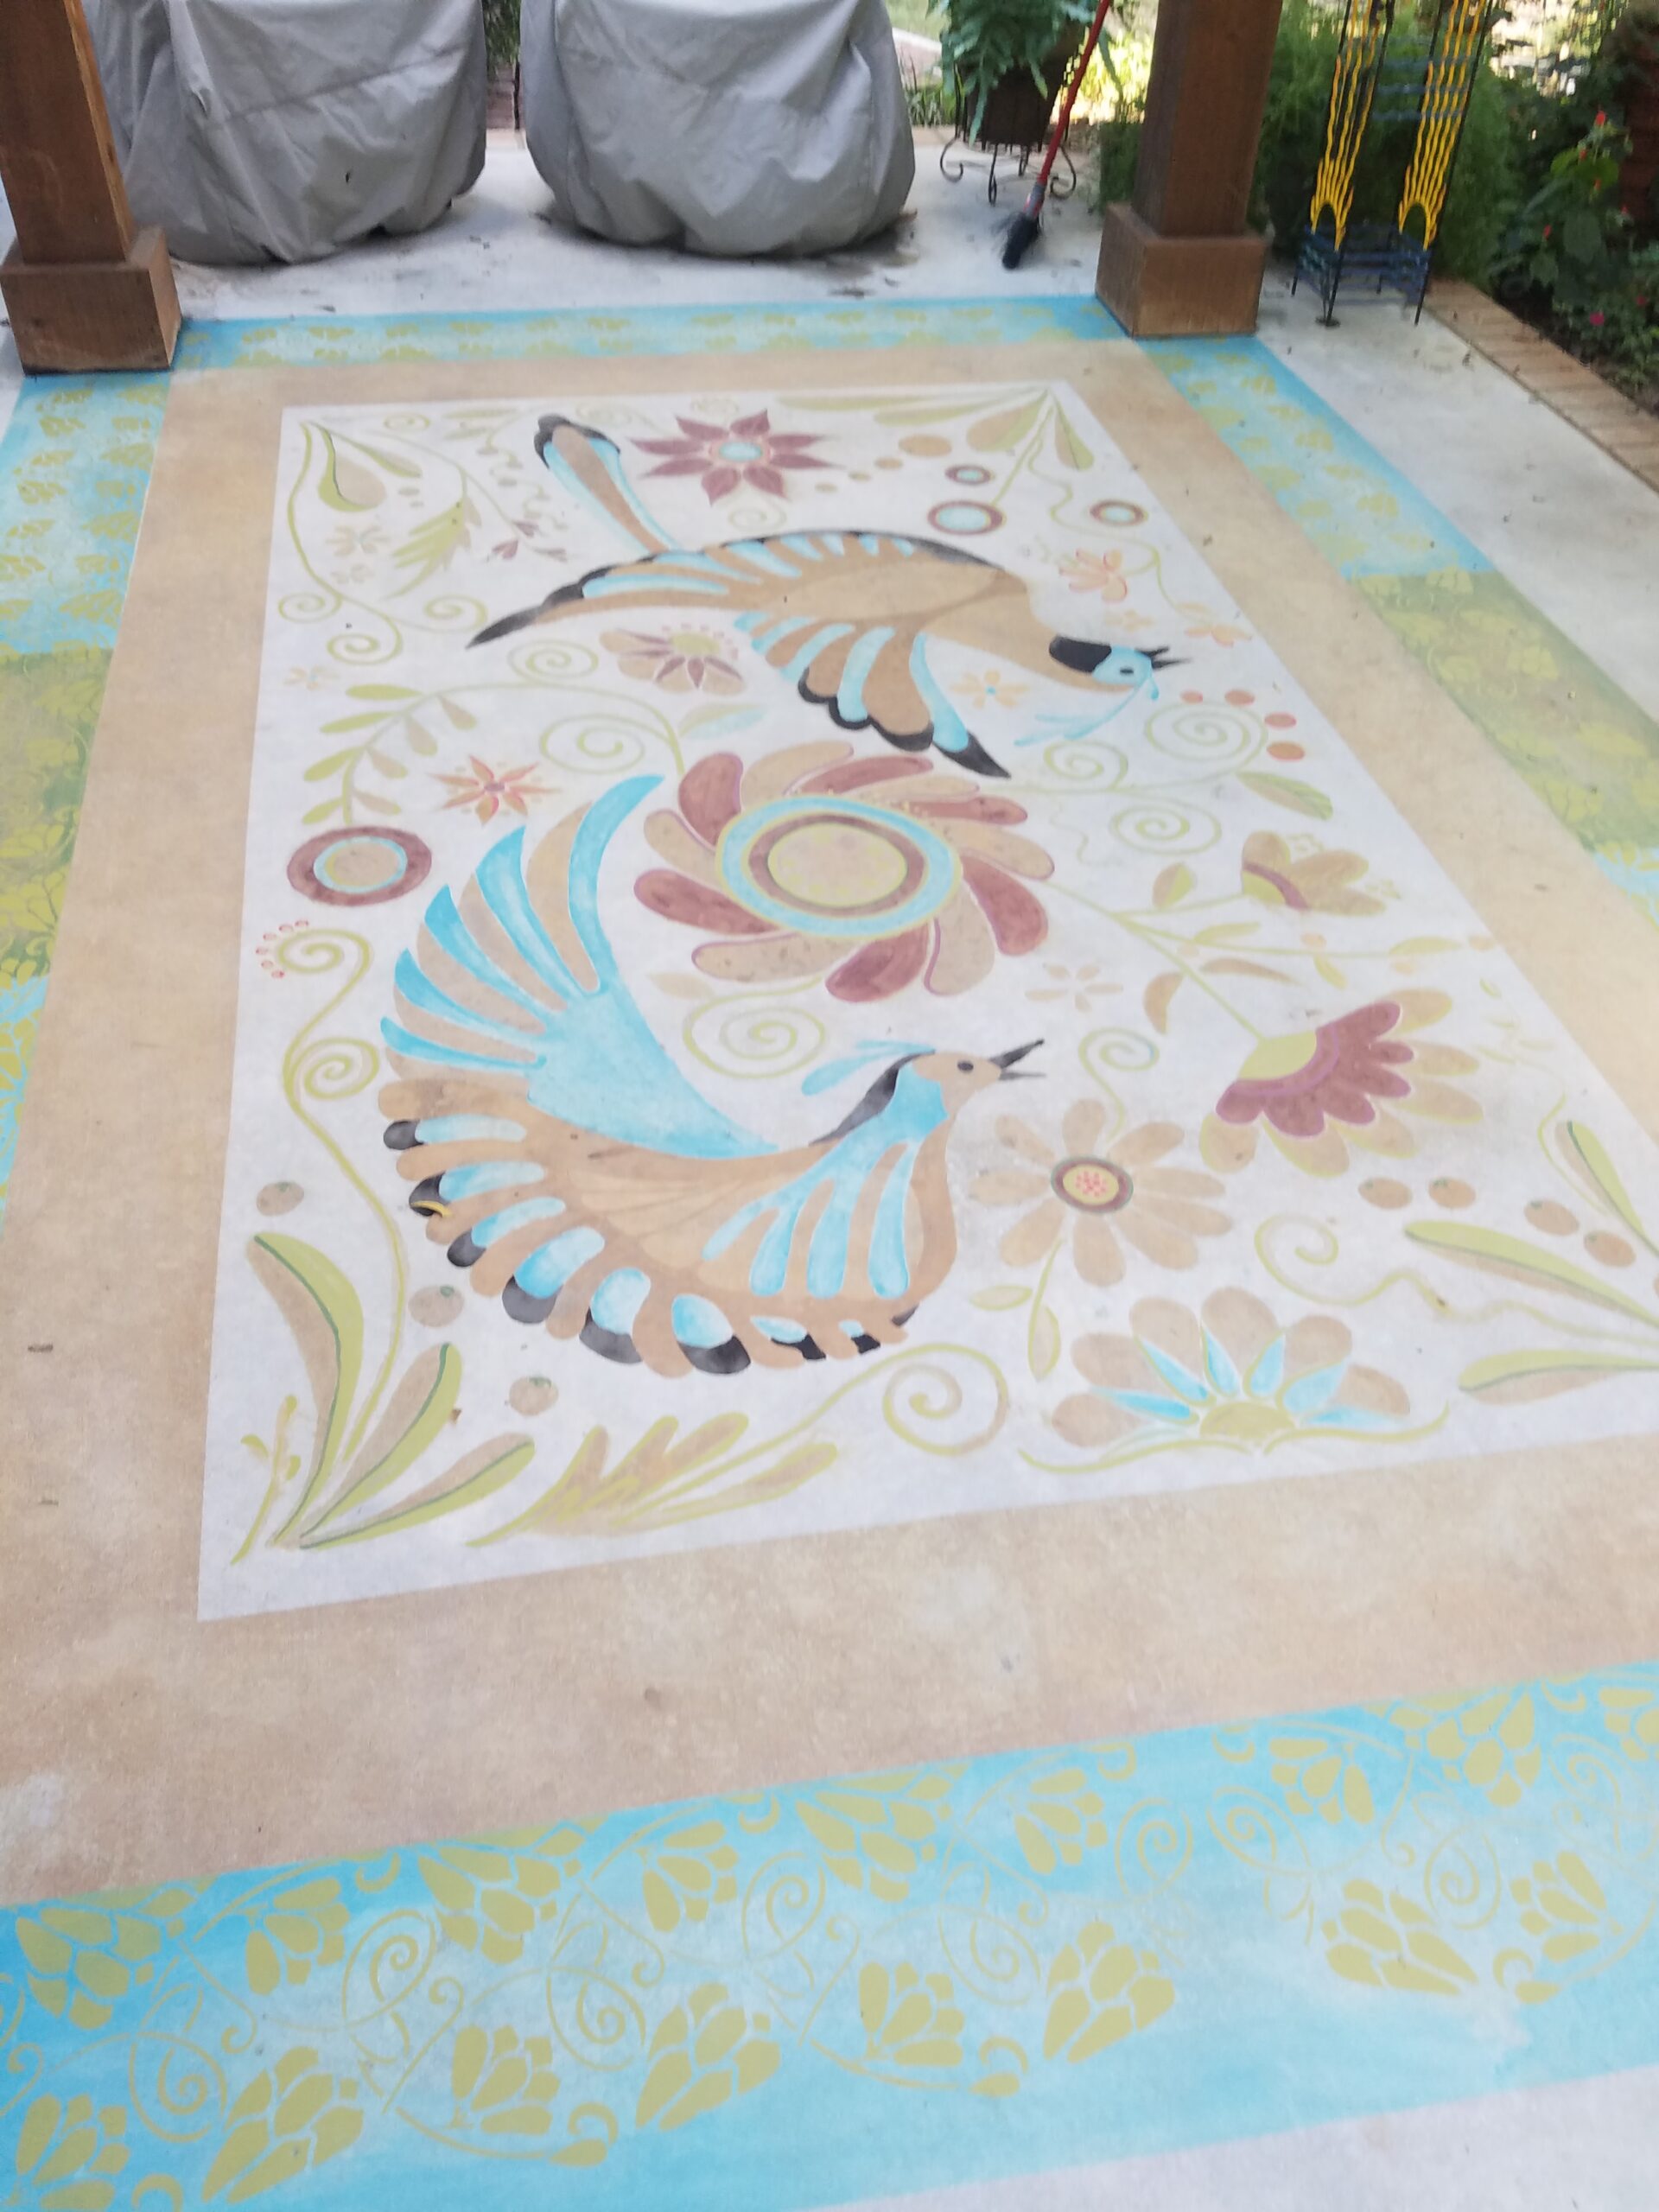 Concrete porch floor enhanced with a custom bird stencil design using DecoGel acid stains to emulate a decorative rug